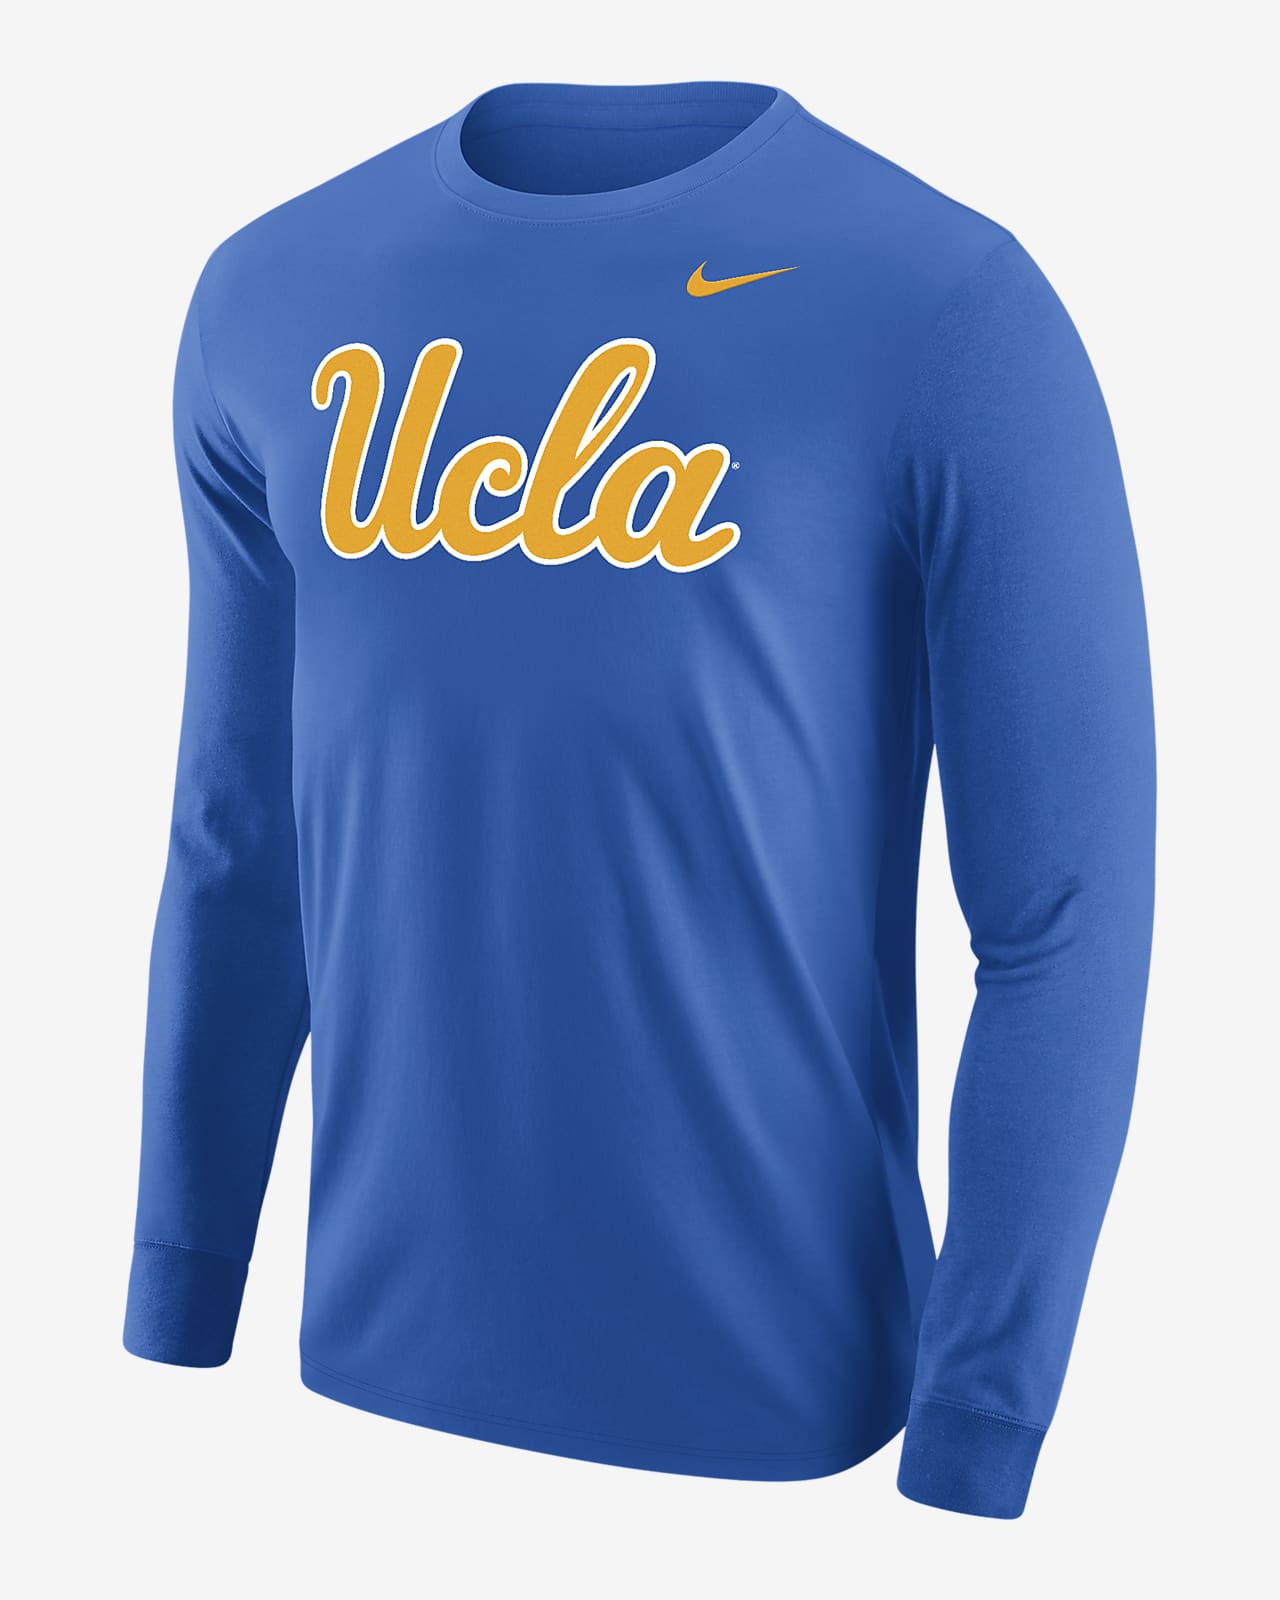 UCLA Men's Nike College Long-Sleeve T-Shirt